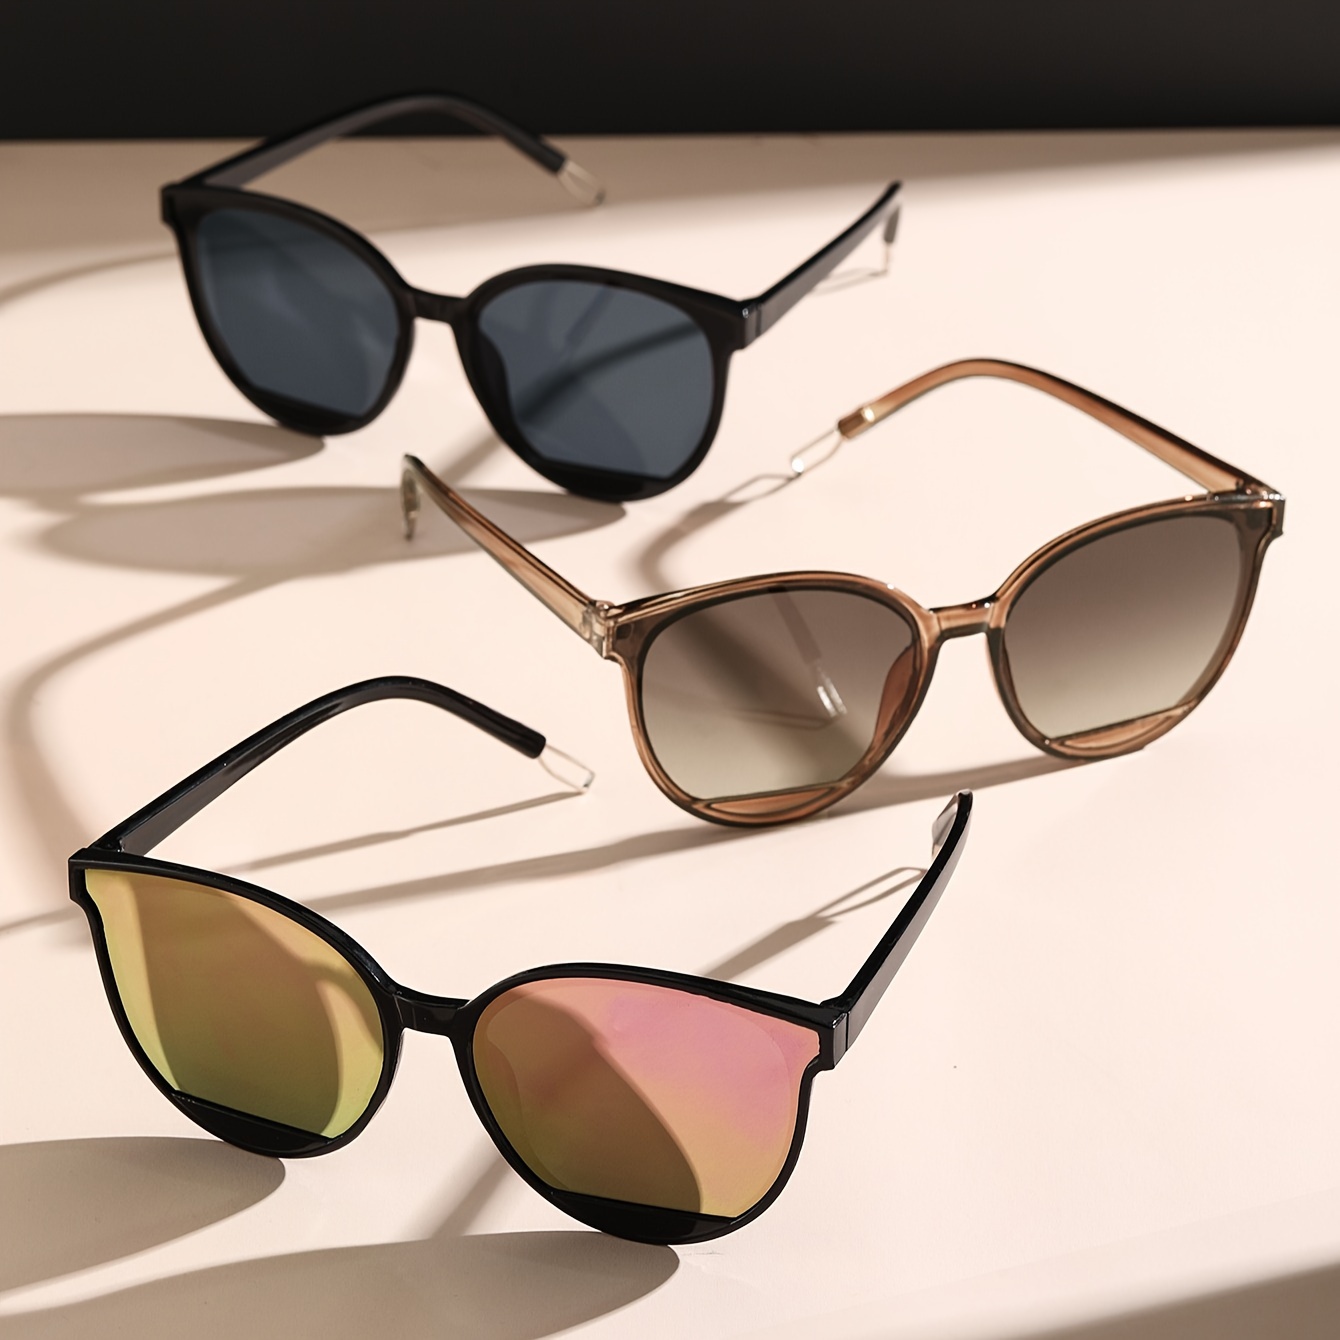 

3pcs Polarized Photochromic Fashion Glasses For Women Men Anti Glare Sun Shades Glasses For Driving Beach Travel